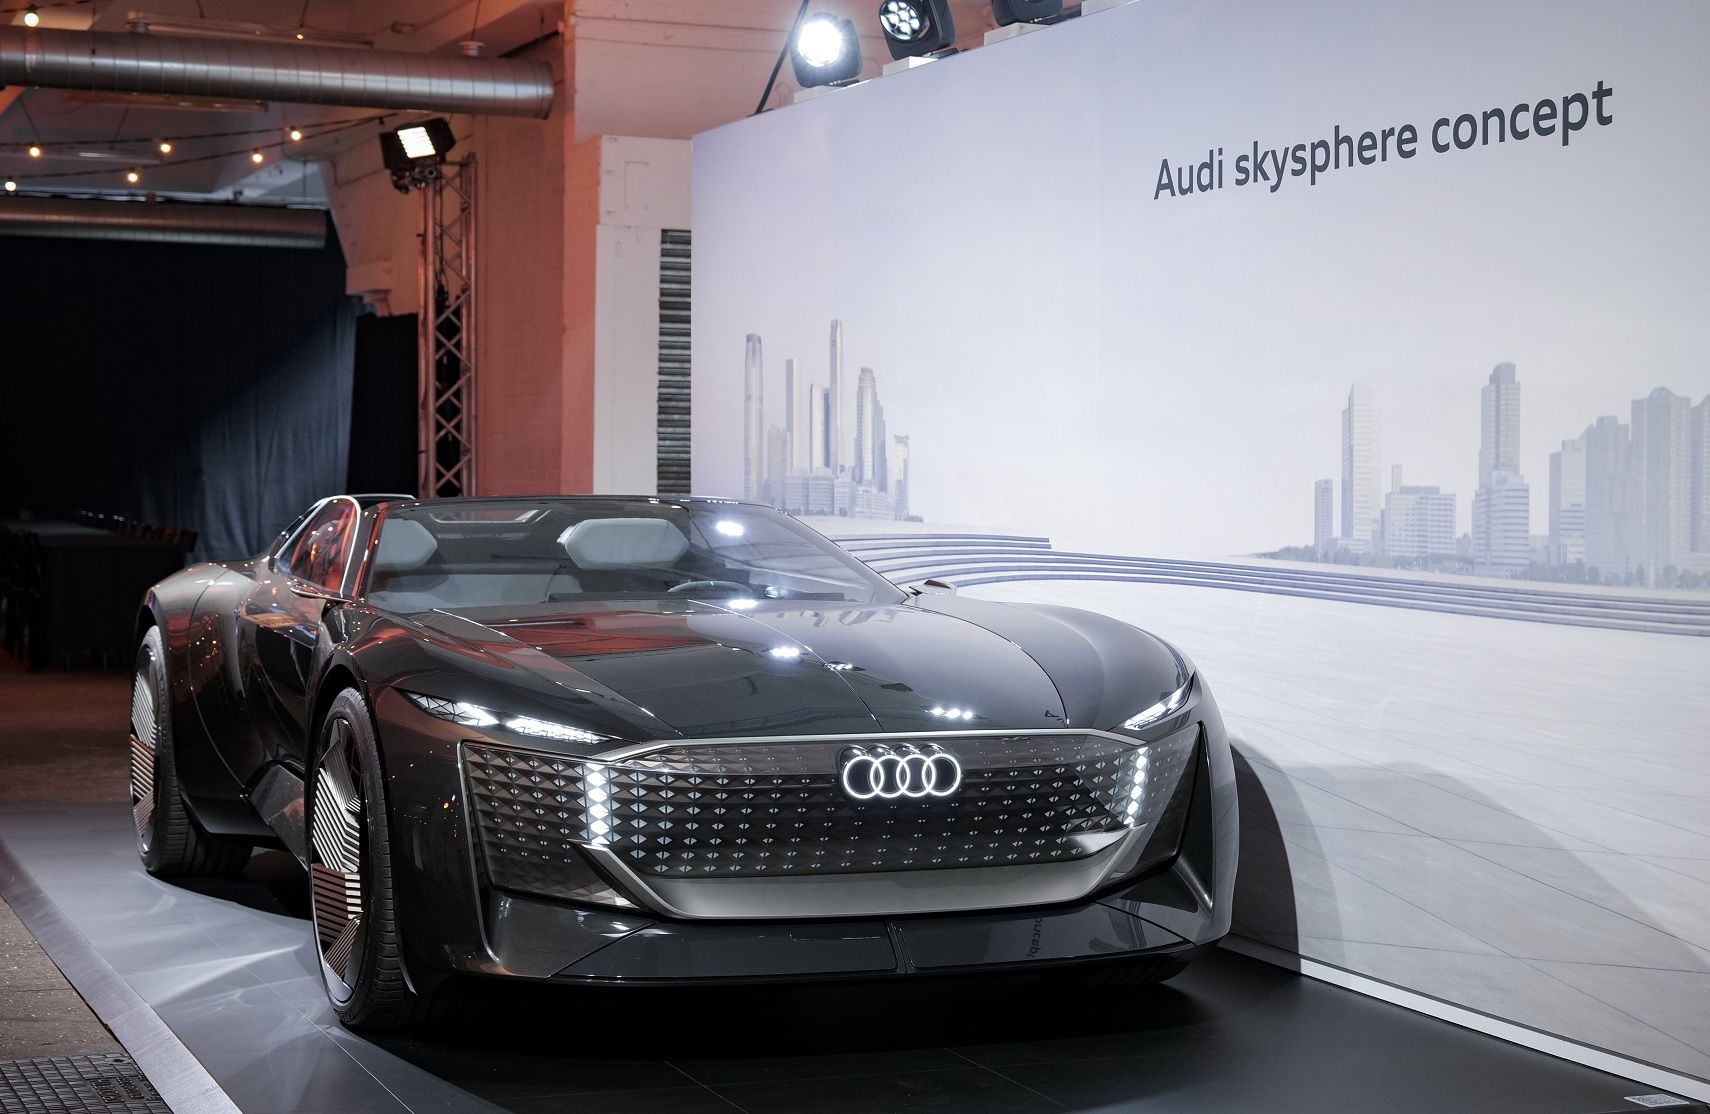 Audi Skysphere Concept Image